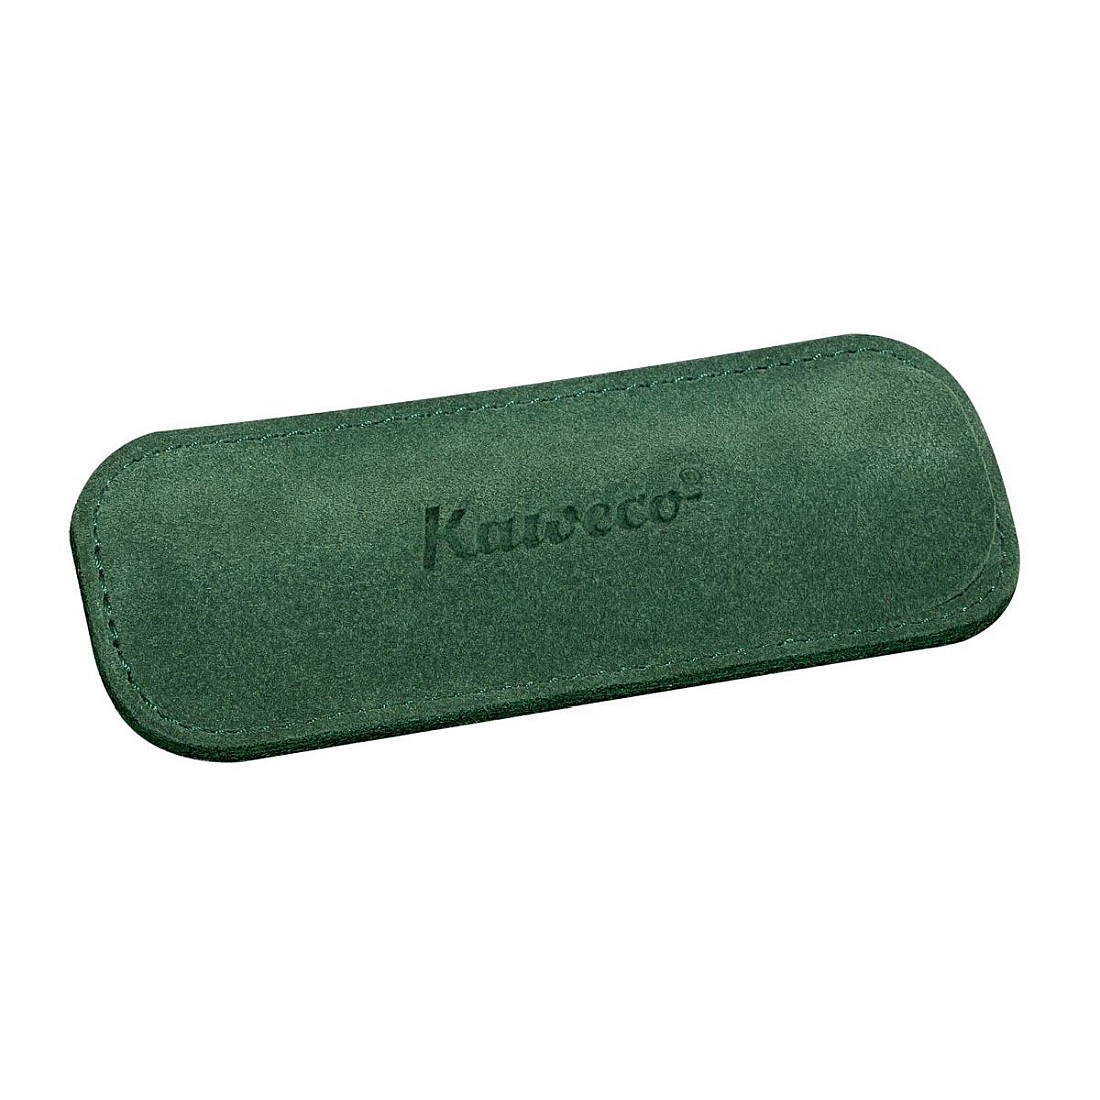 Kaweco Sport Eco Green Velour Pen Pouch 2 Pens